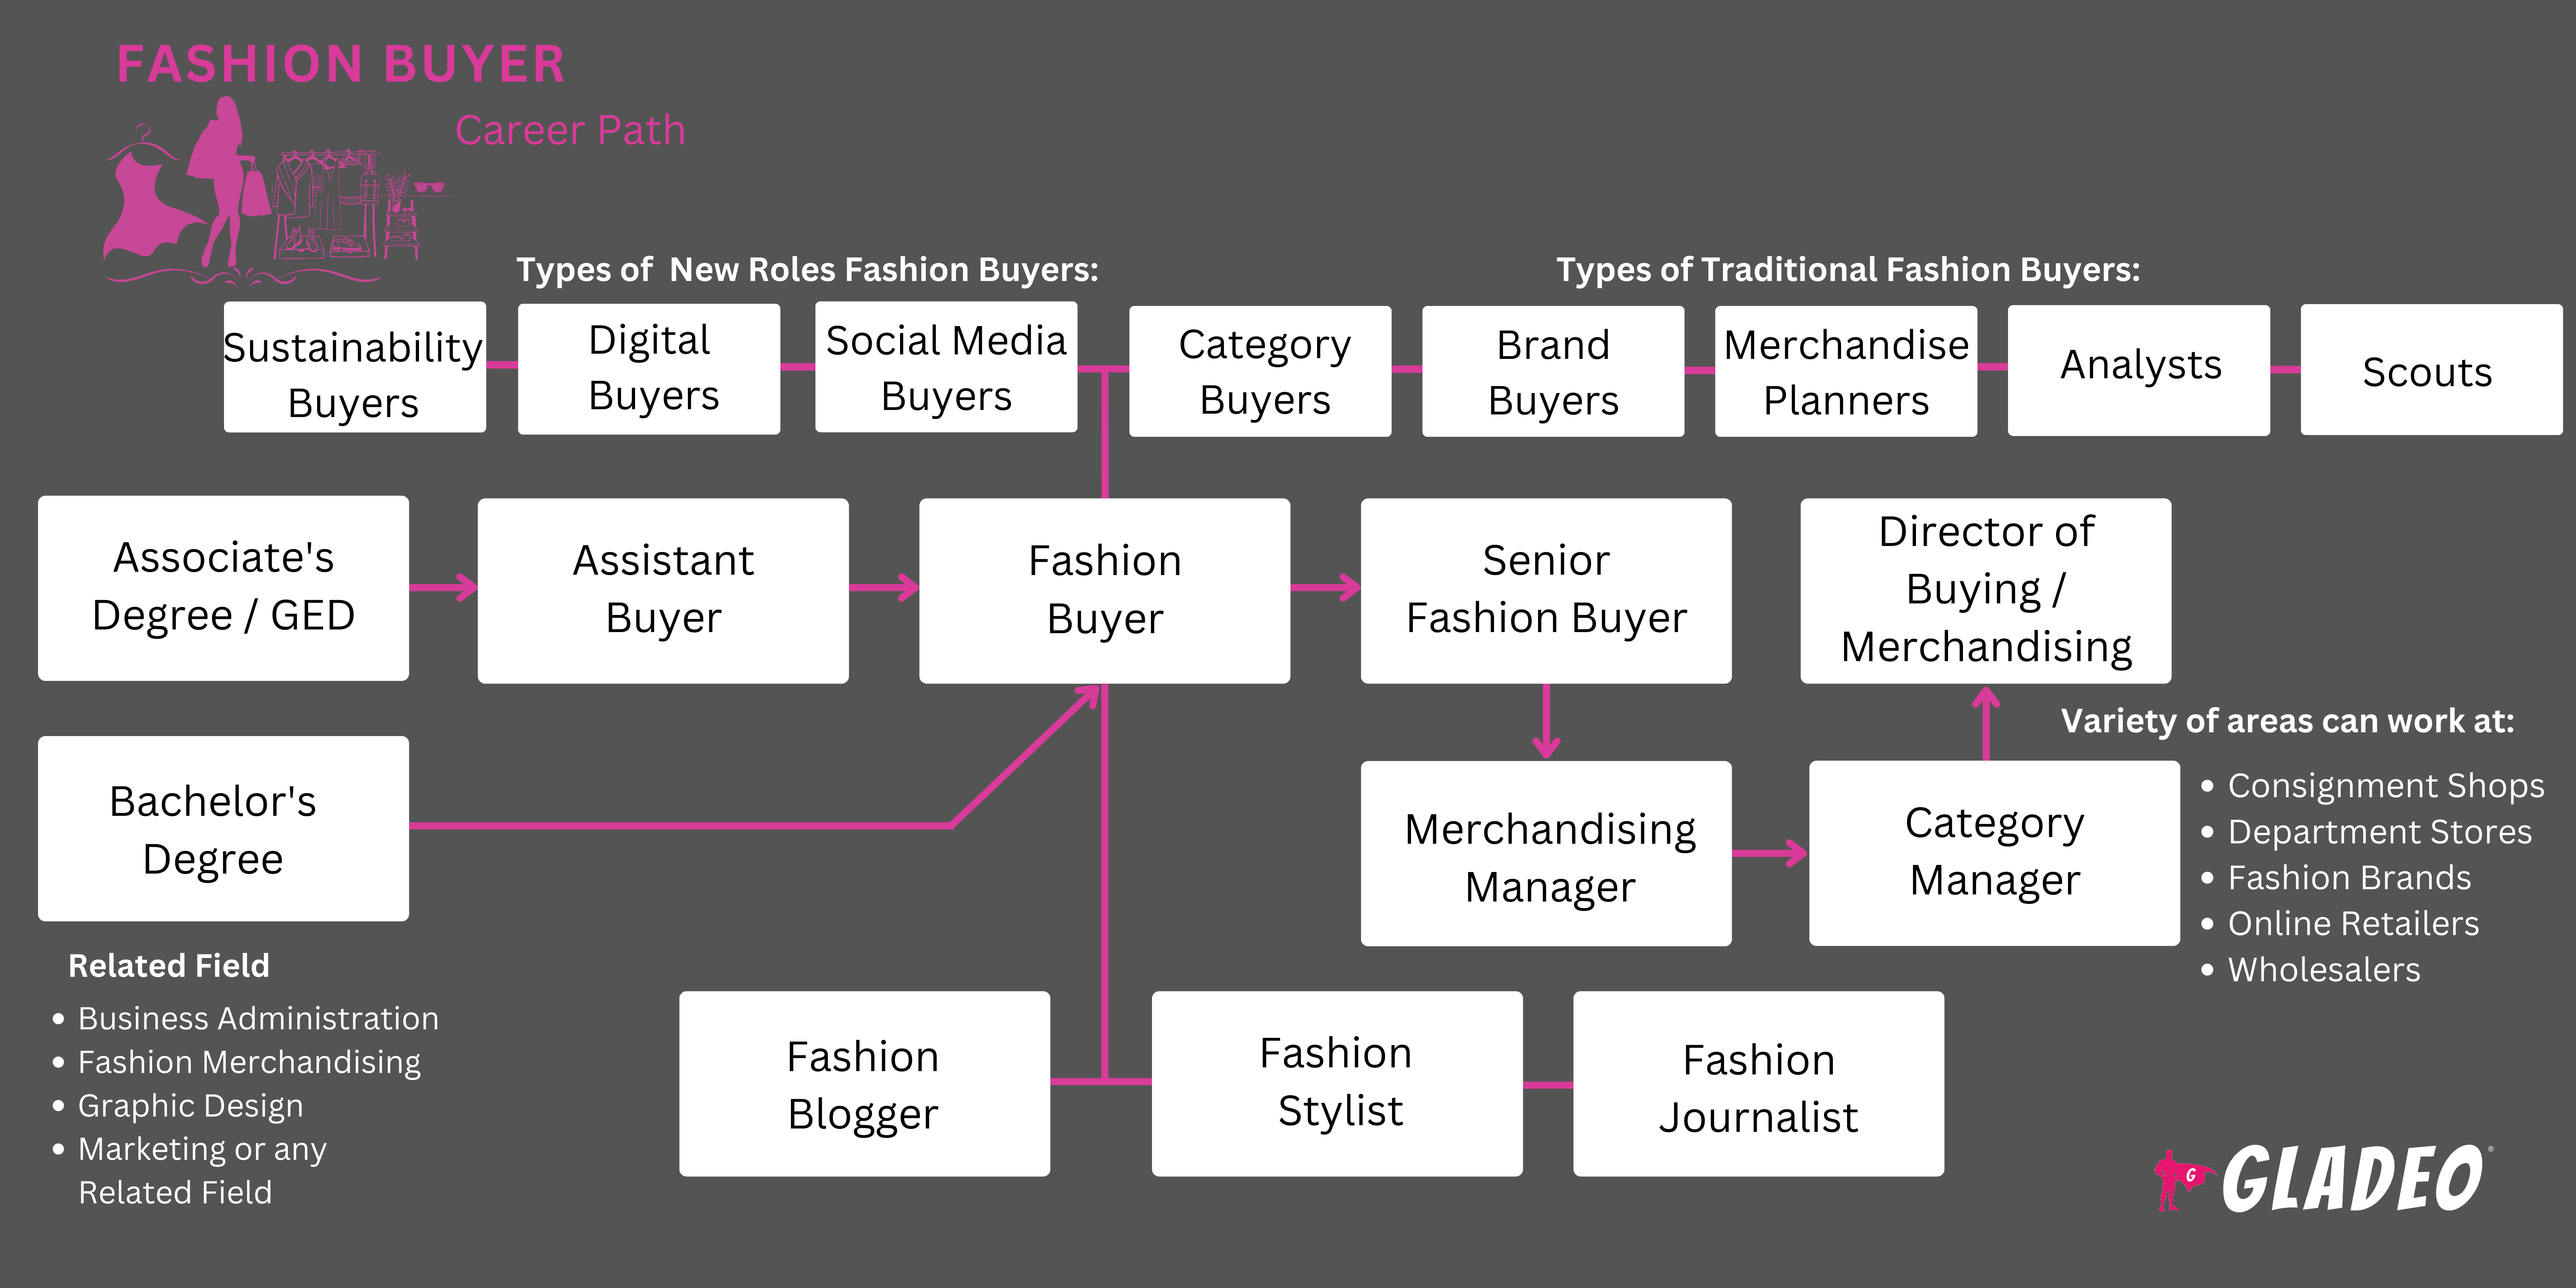 Hoja de ruta del comprador de moda